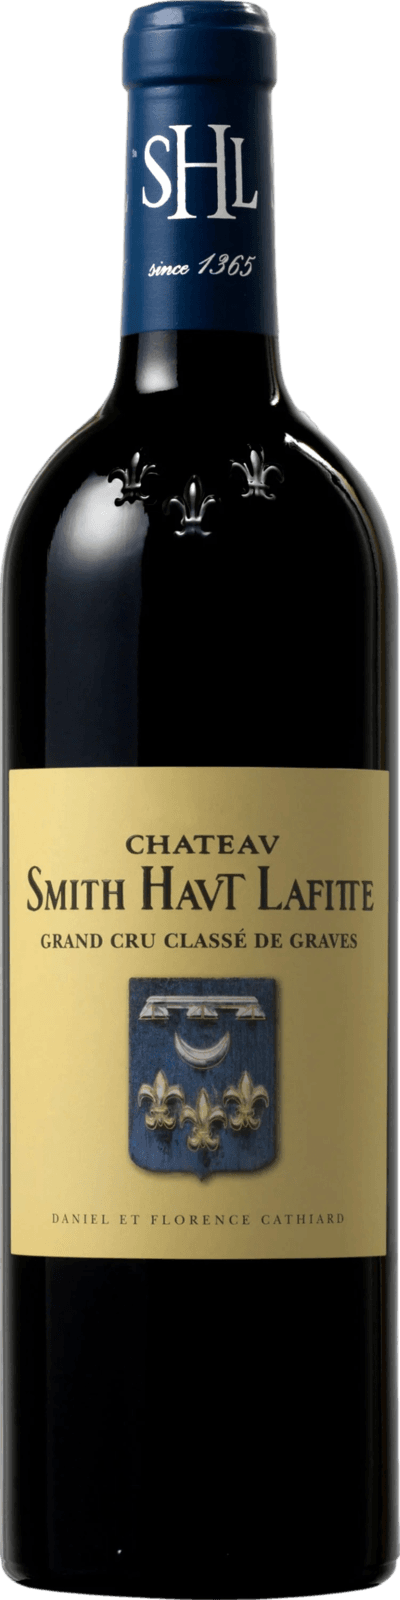 Chateau Smith Haut Lafitte 2016